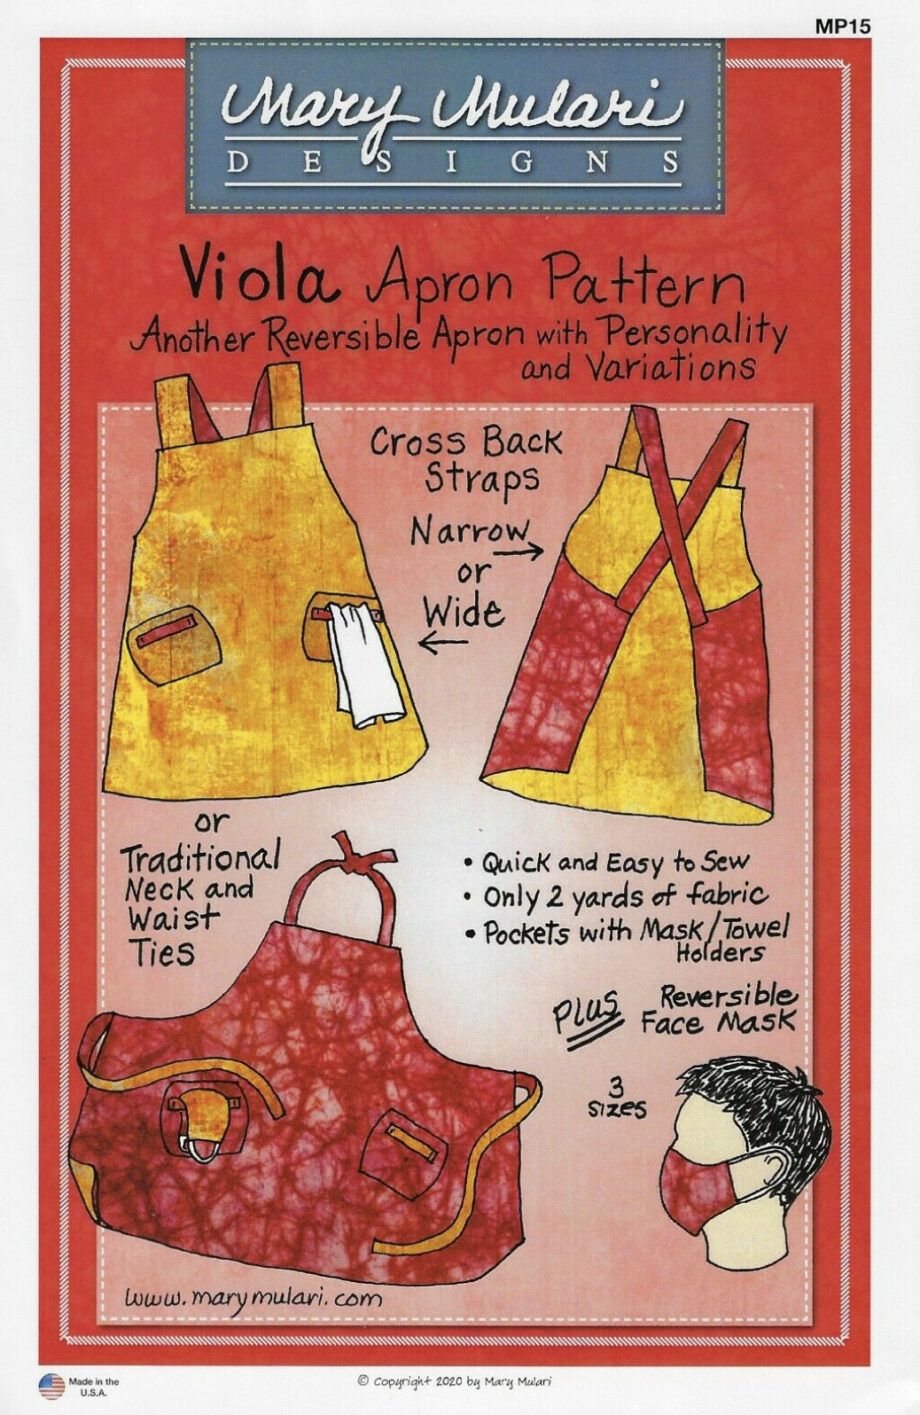 viola apron pattern by mary mulari